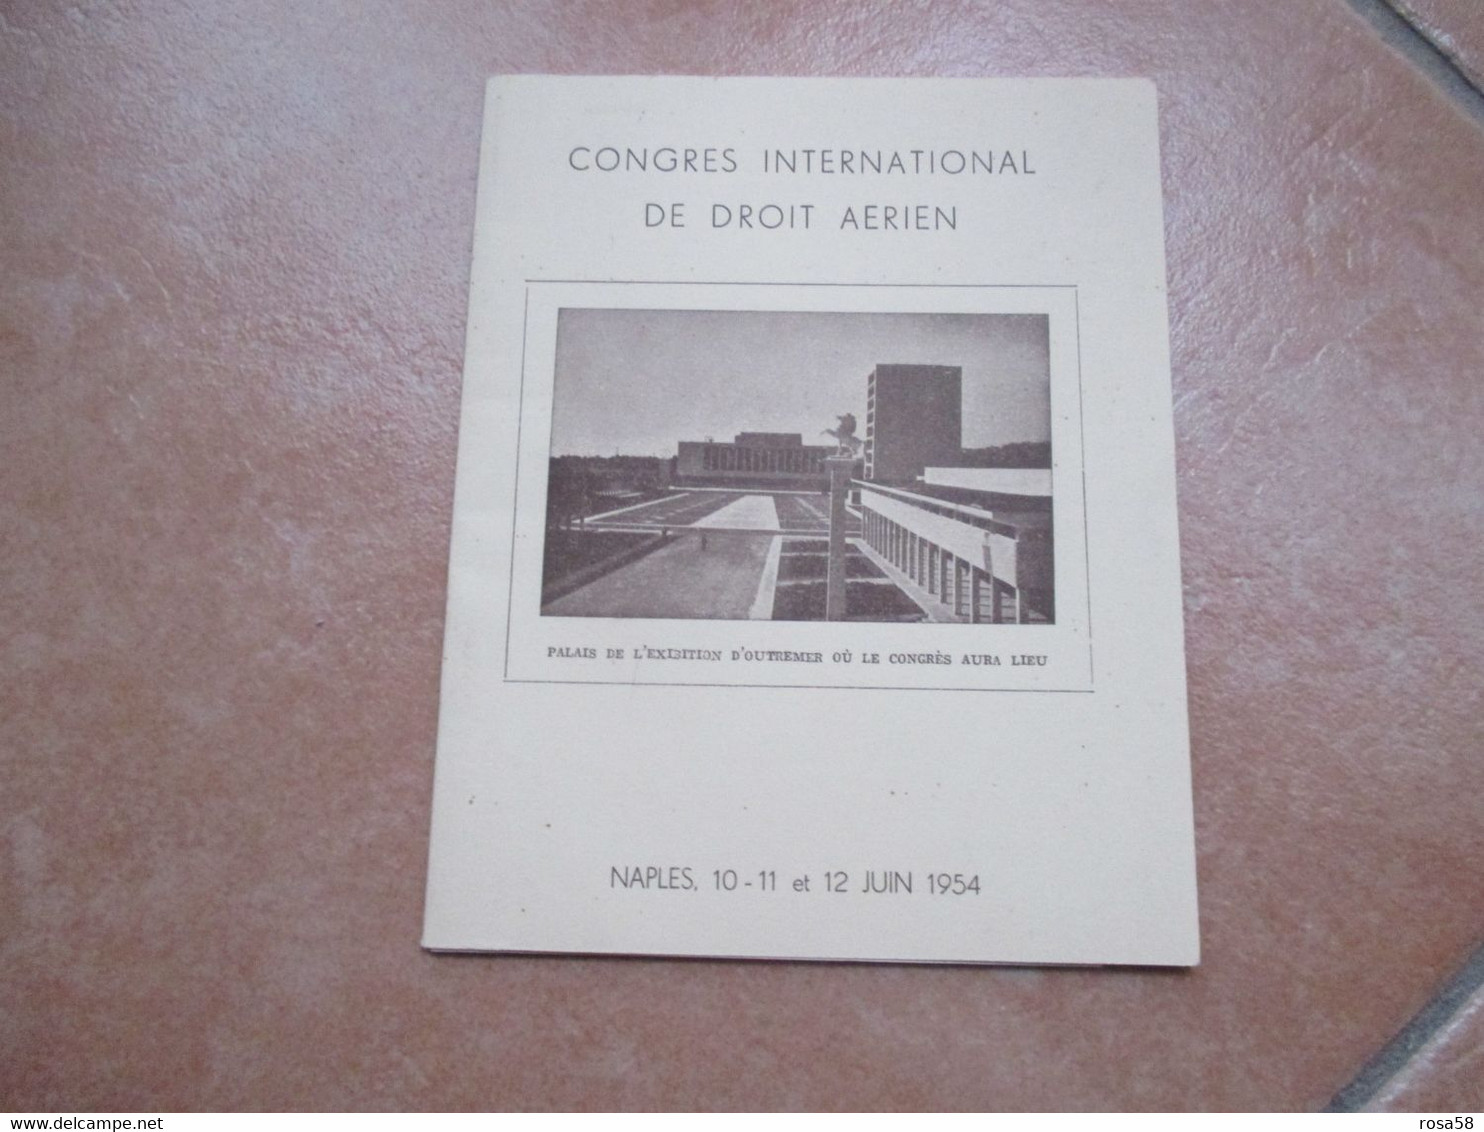 1954 Congres International De Droit Aerien NAPLES 10 11 12 Jiun Mostra Oltremare Napoli PROGRAMMA - Programmes